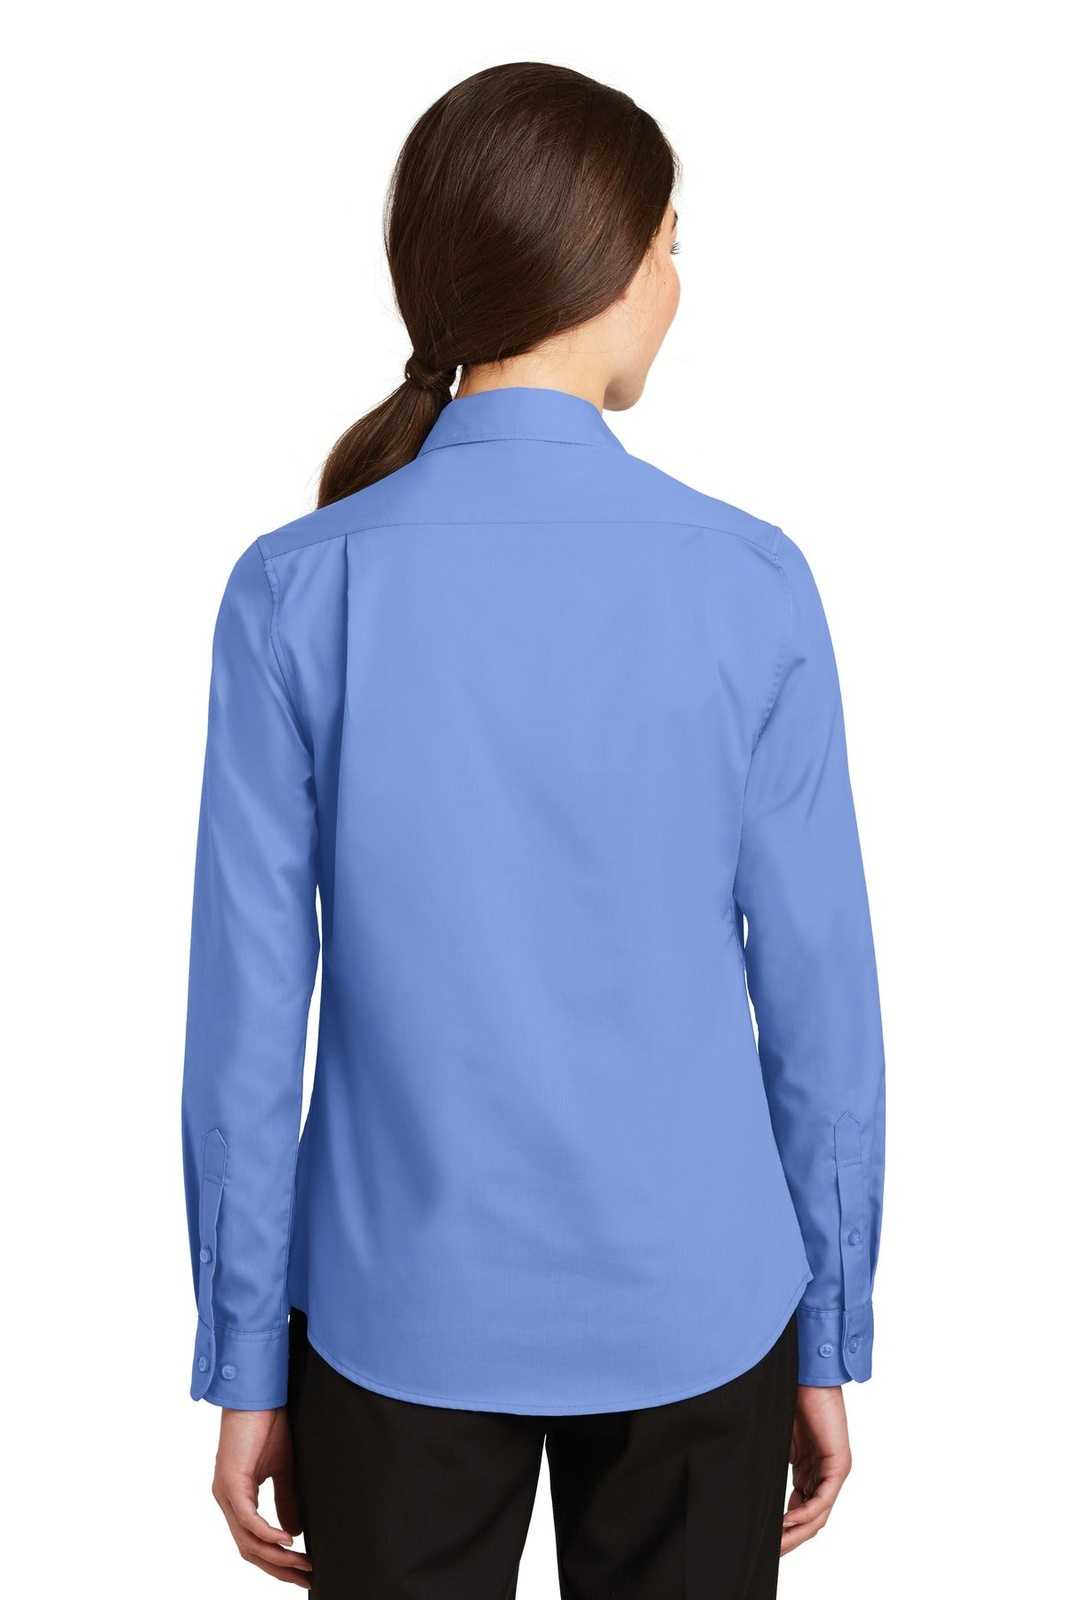 Port Authority L663 Ladies Superpro Twill Shirt - Ultramarine Blue - HIT a Double - 2